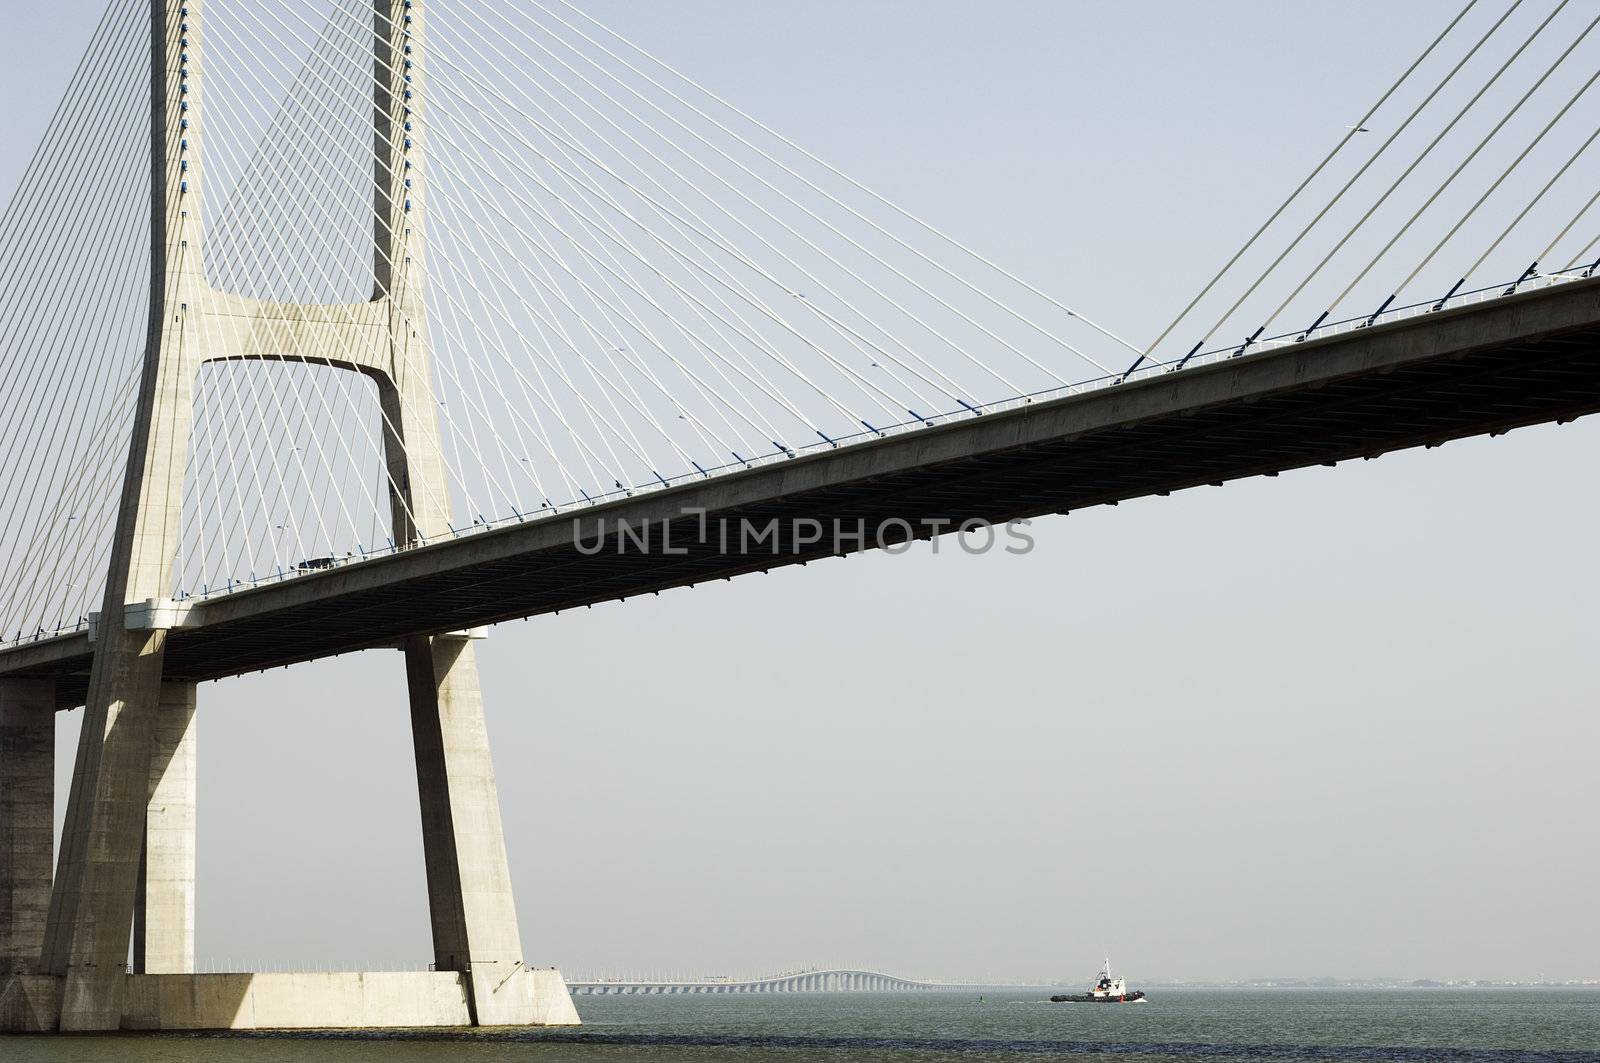 Vasco da Gama bridge over Tagus river, Portugal